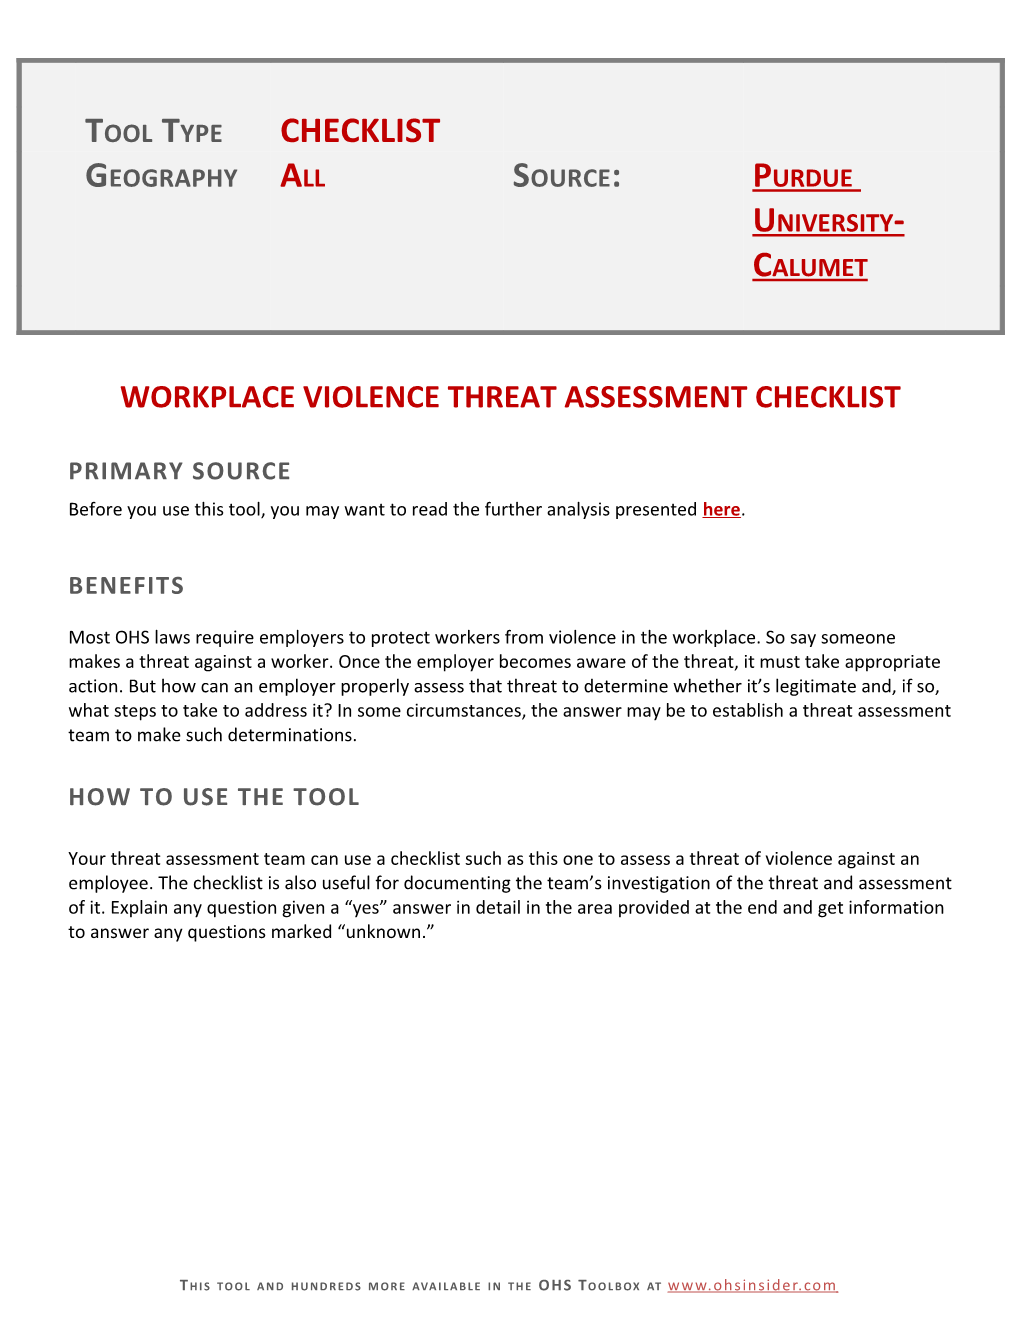 Workplace Violence Threat Assessment Checklist